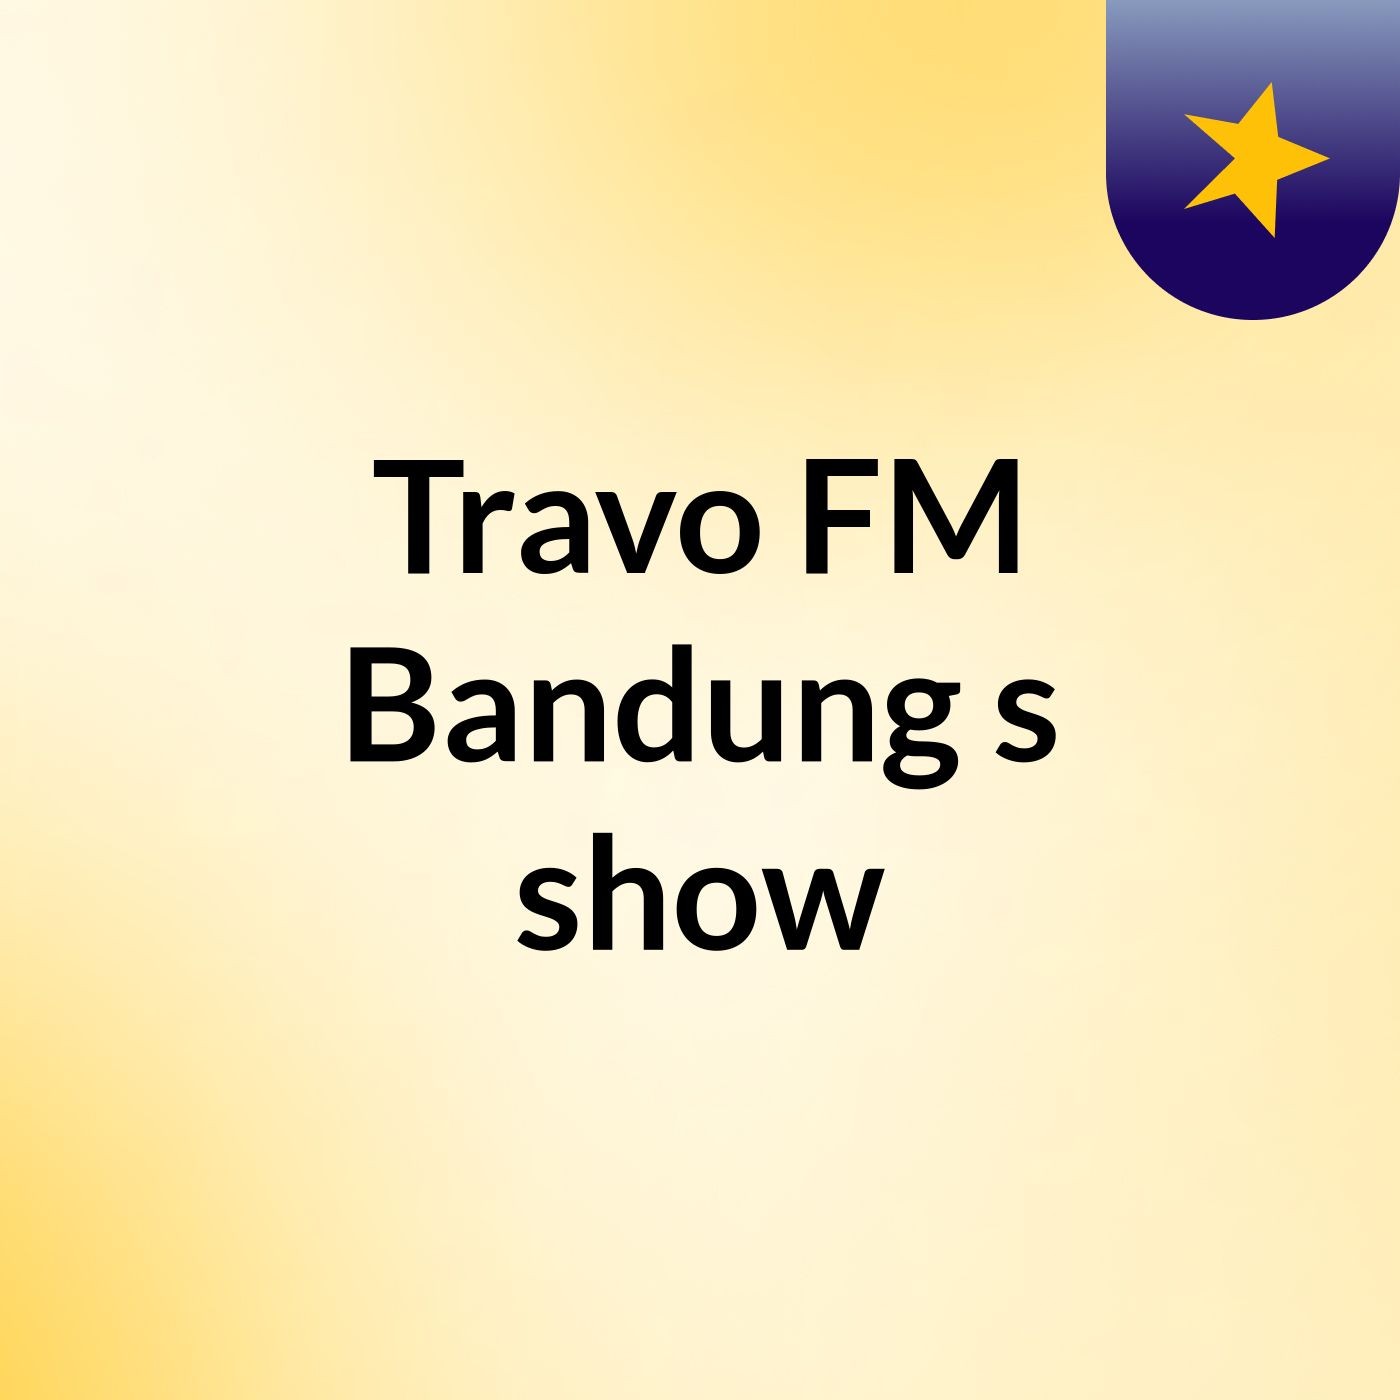 Travo FM Bandung's show